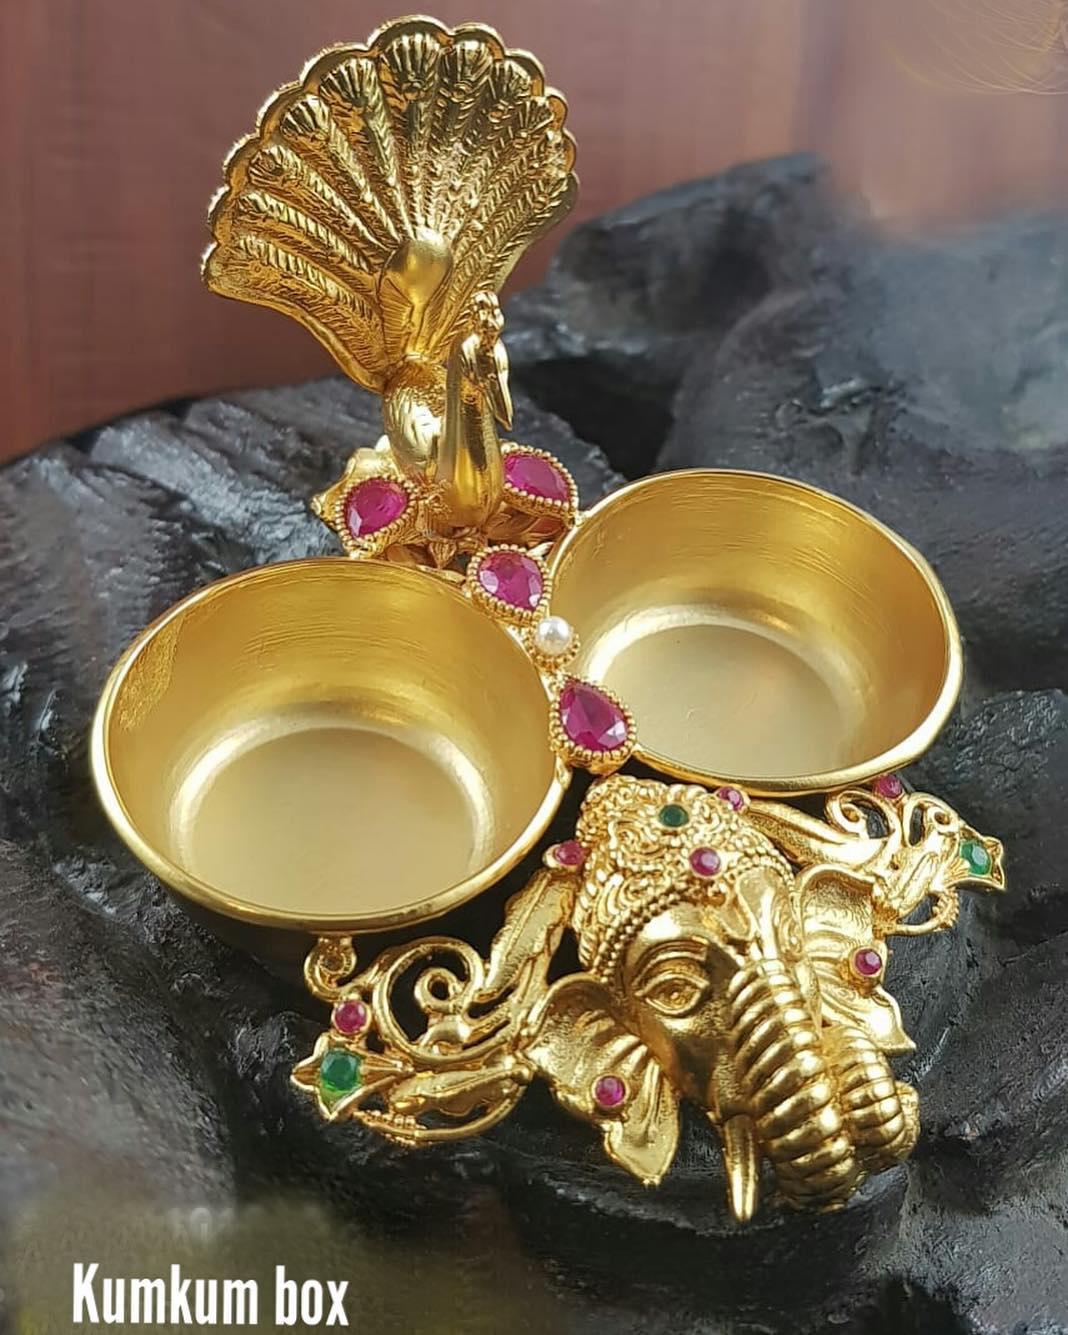 Set of 5 Haldi Kumkum Holder Tilak Box Kankavati for Indian Traditional Festival Gift Return Gifts Wedding Gift Decorative Pooja puja Item Kit Décor Decorations 2.5” to 4”